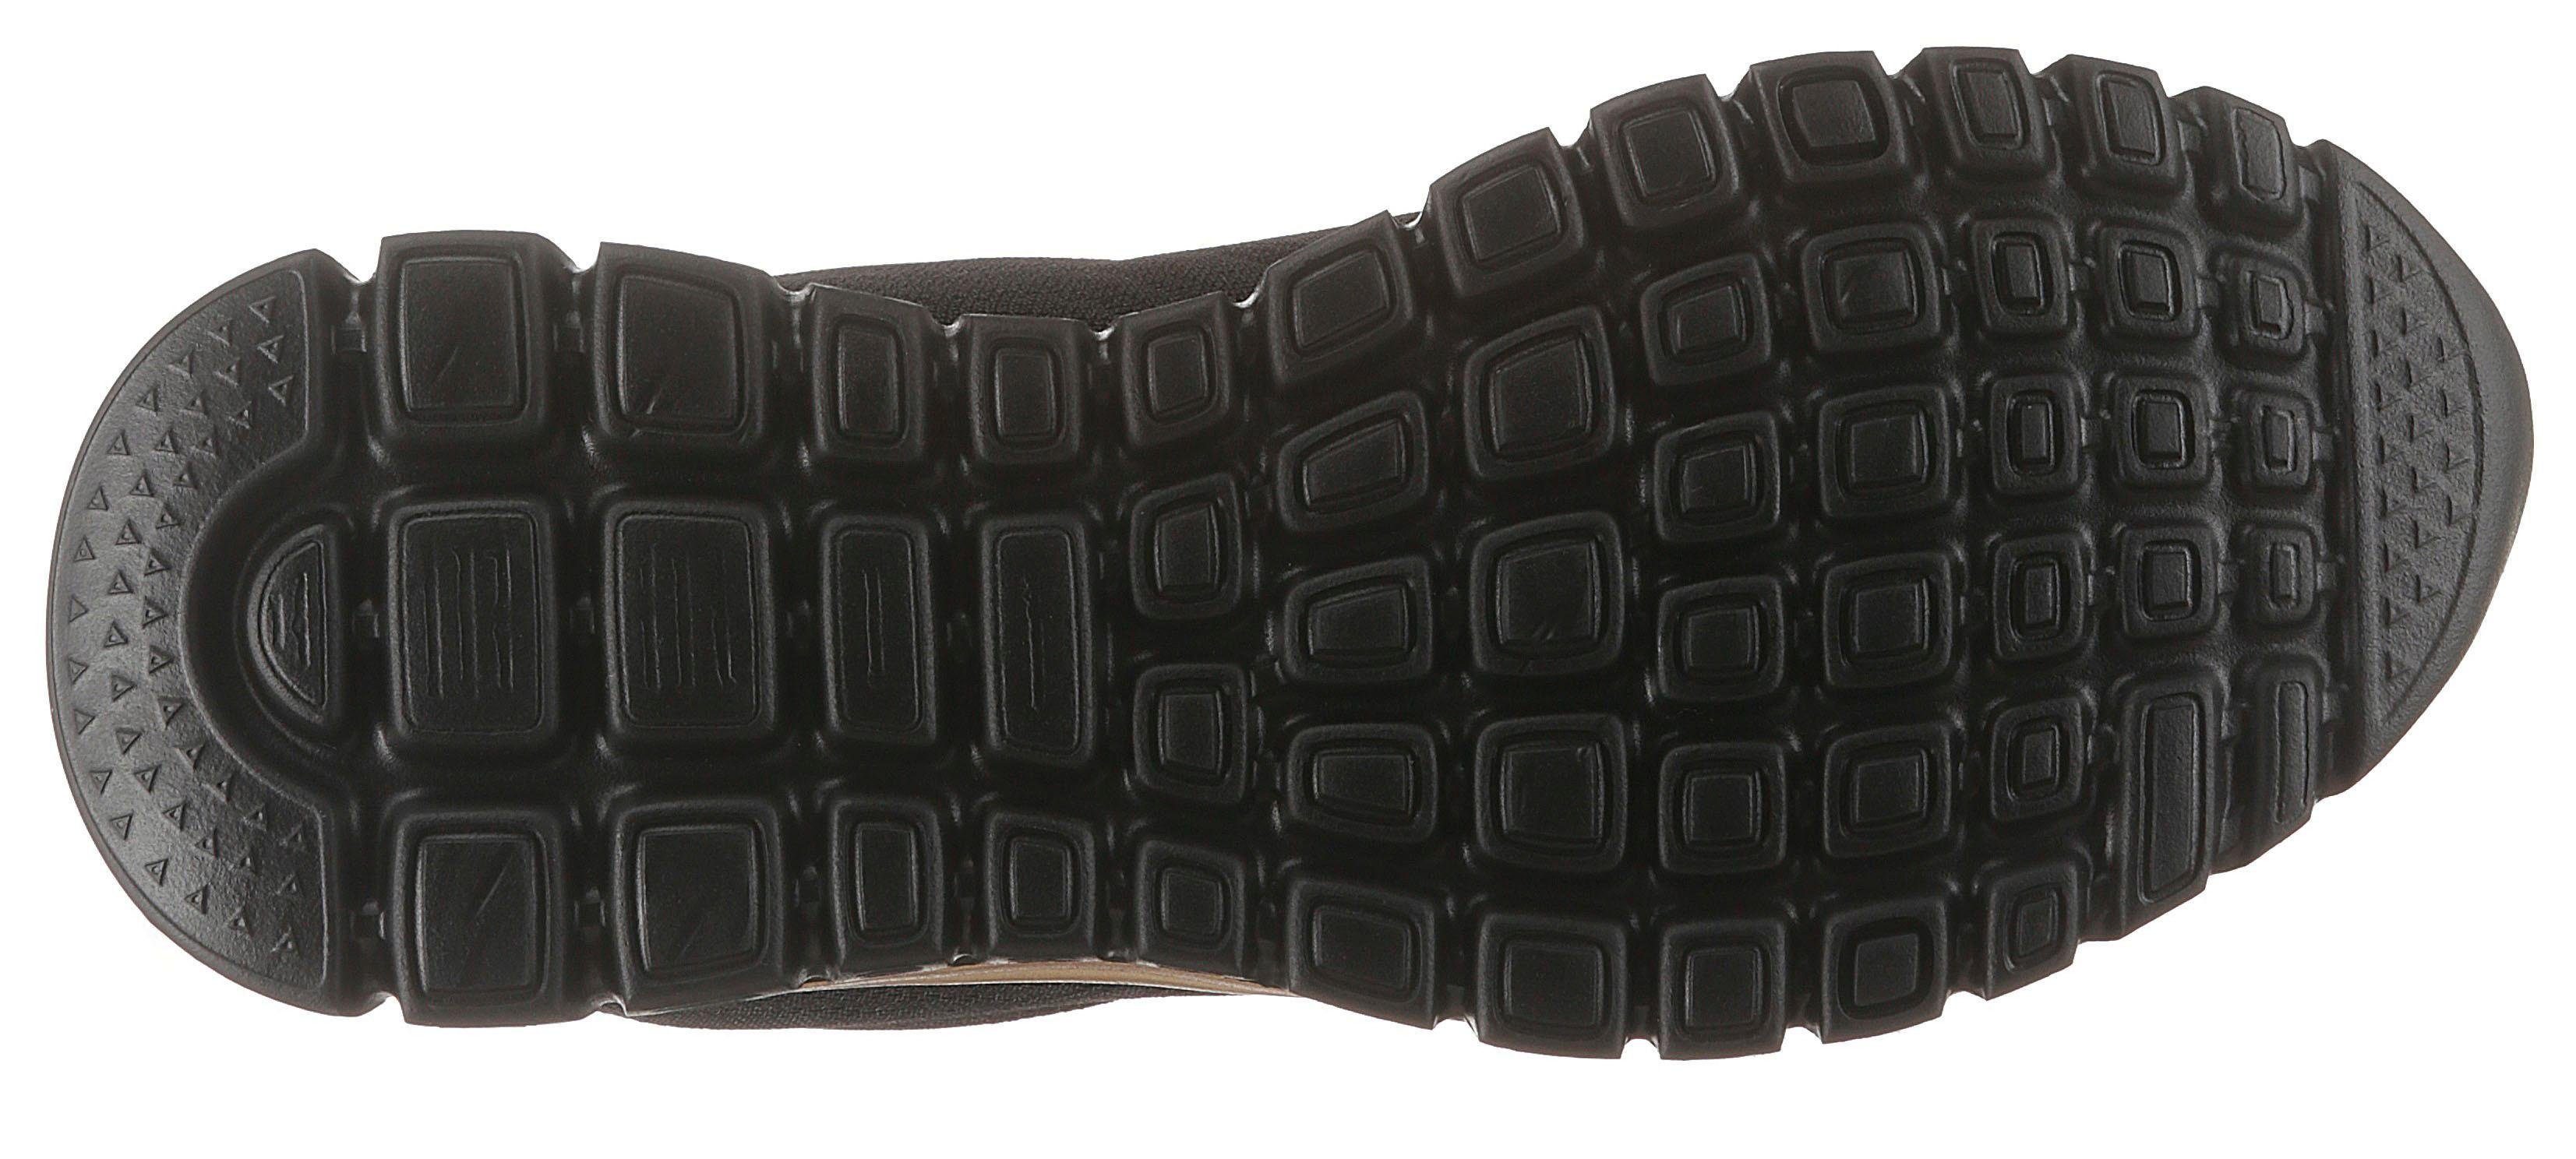 Connected durch mit Get Memory Skechers Graceful schwarz-goldfarben - Foam Dämpfung Sneaker